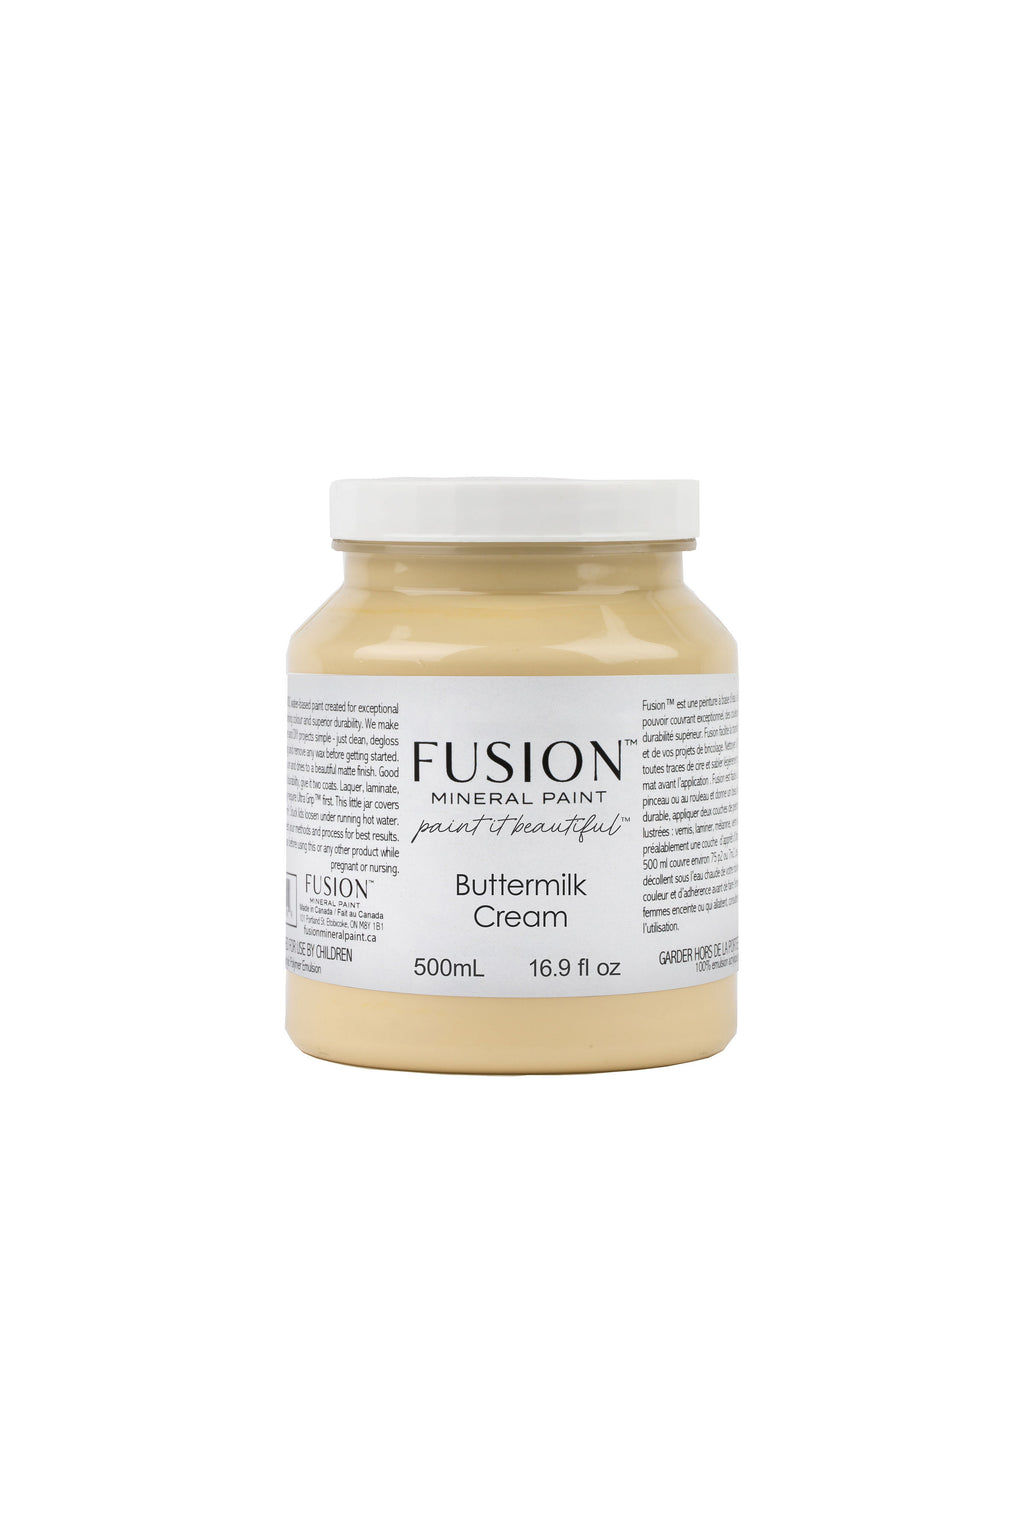 Buttermilk Cream Fusion Mineral Paint - Pint